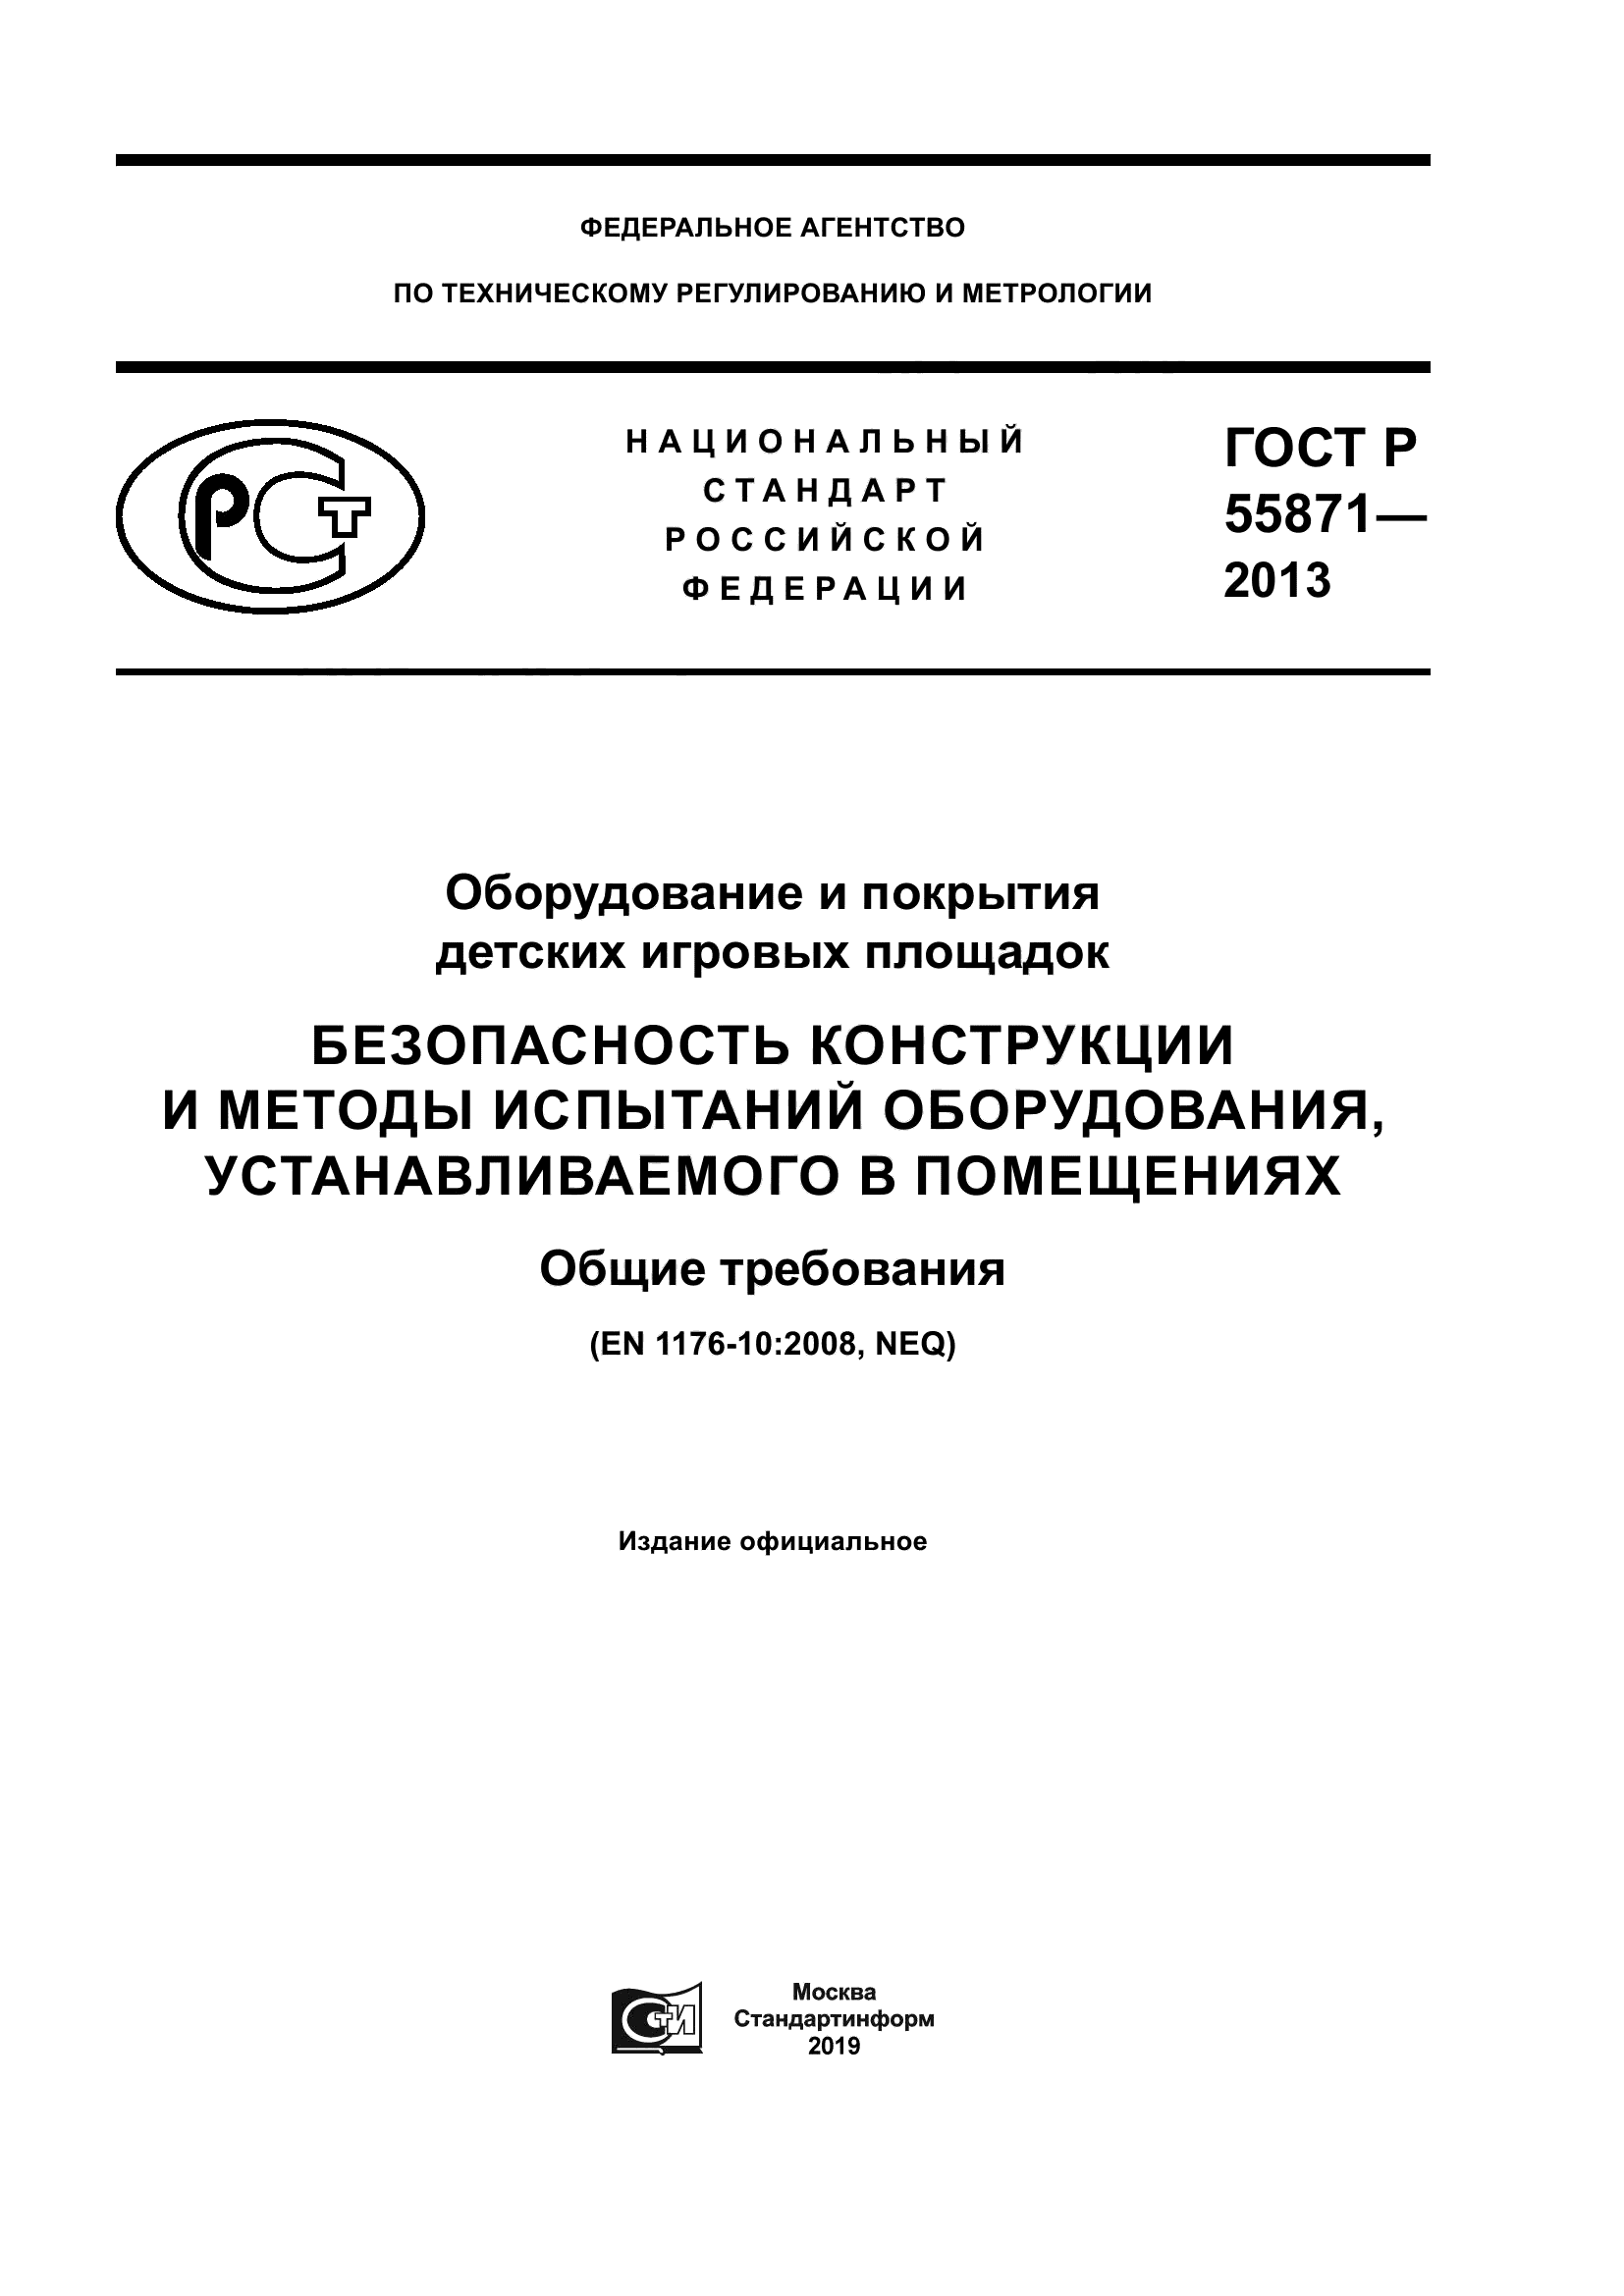 ГОСТ Р 55871-2013